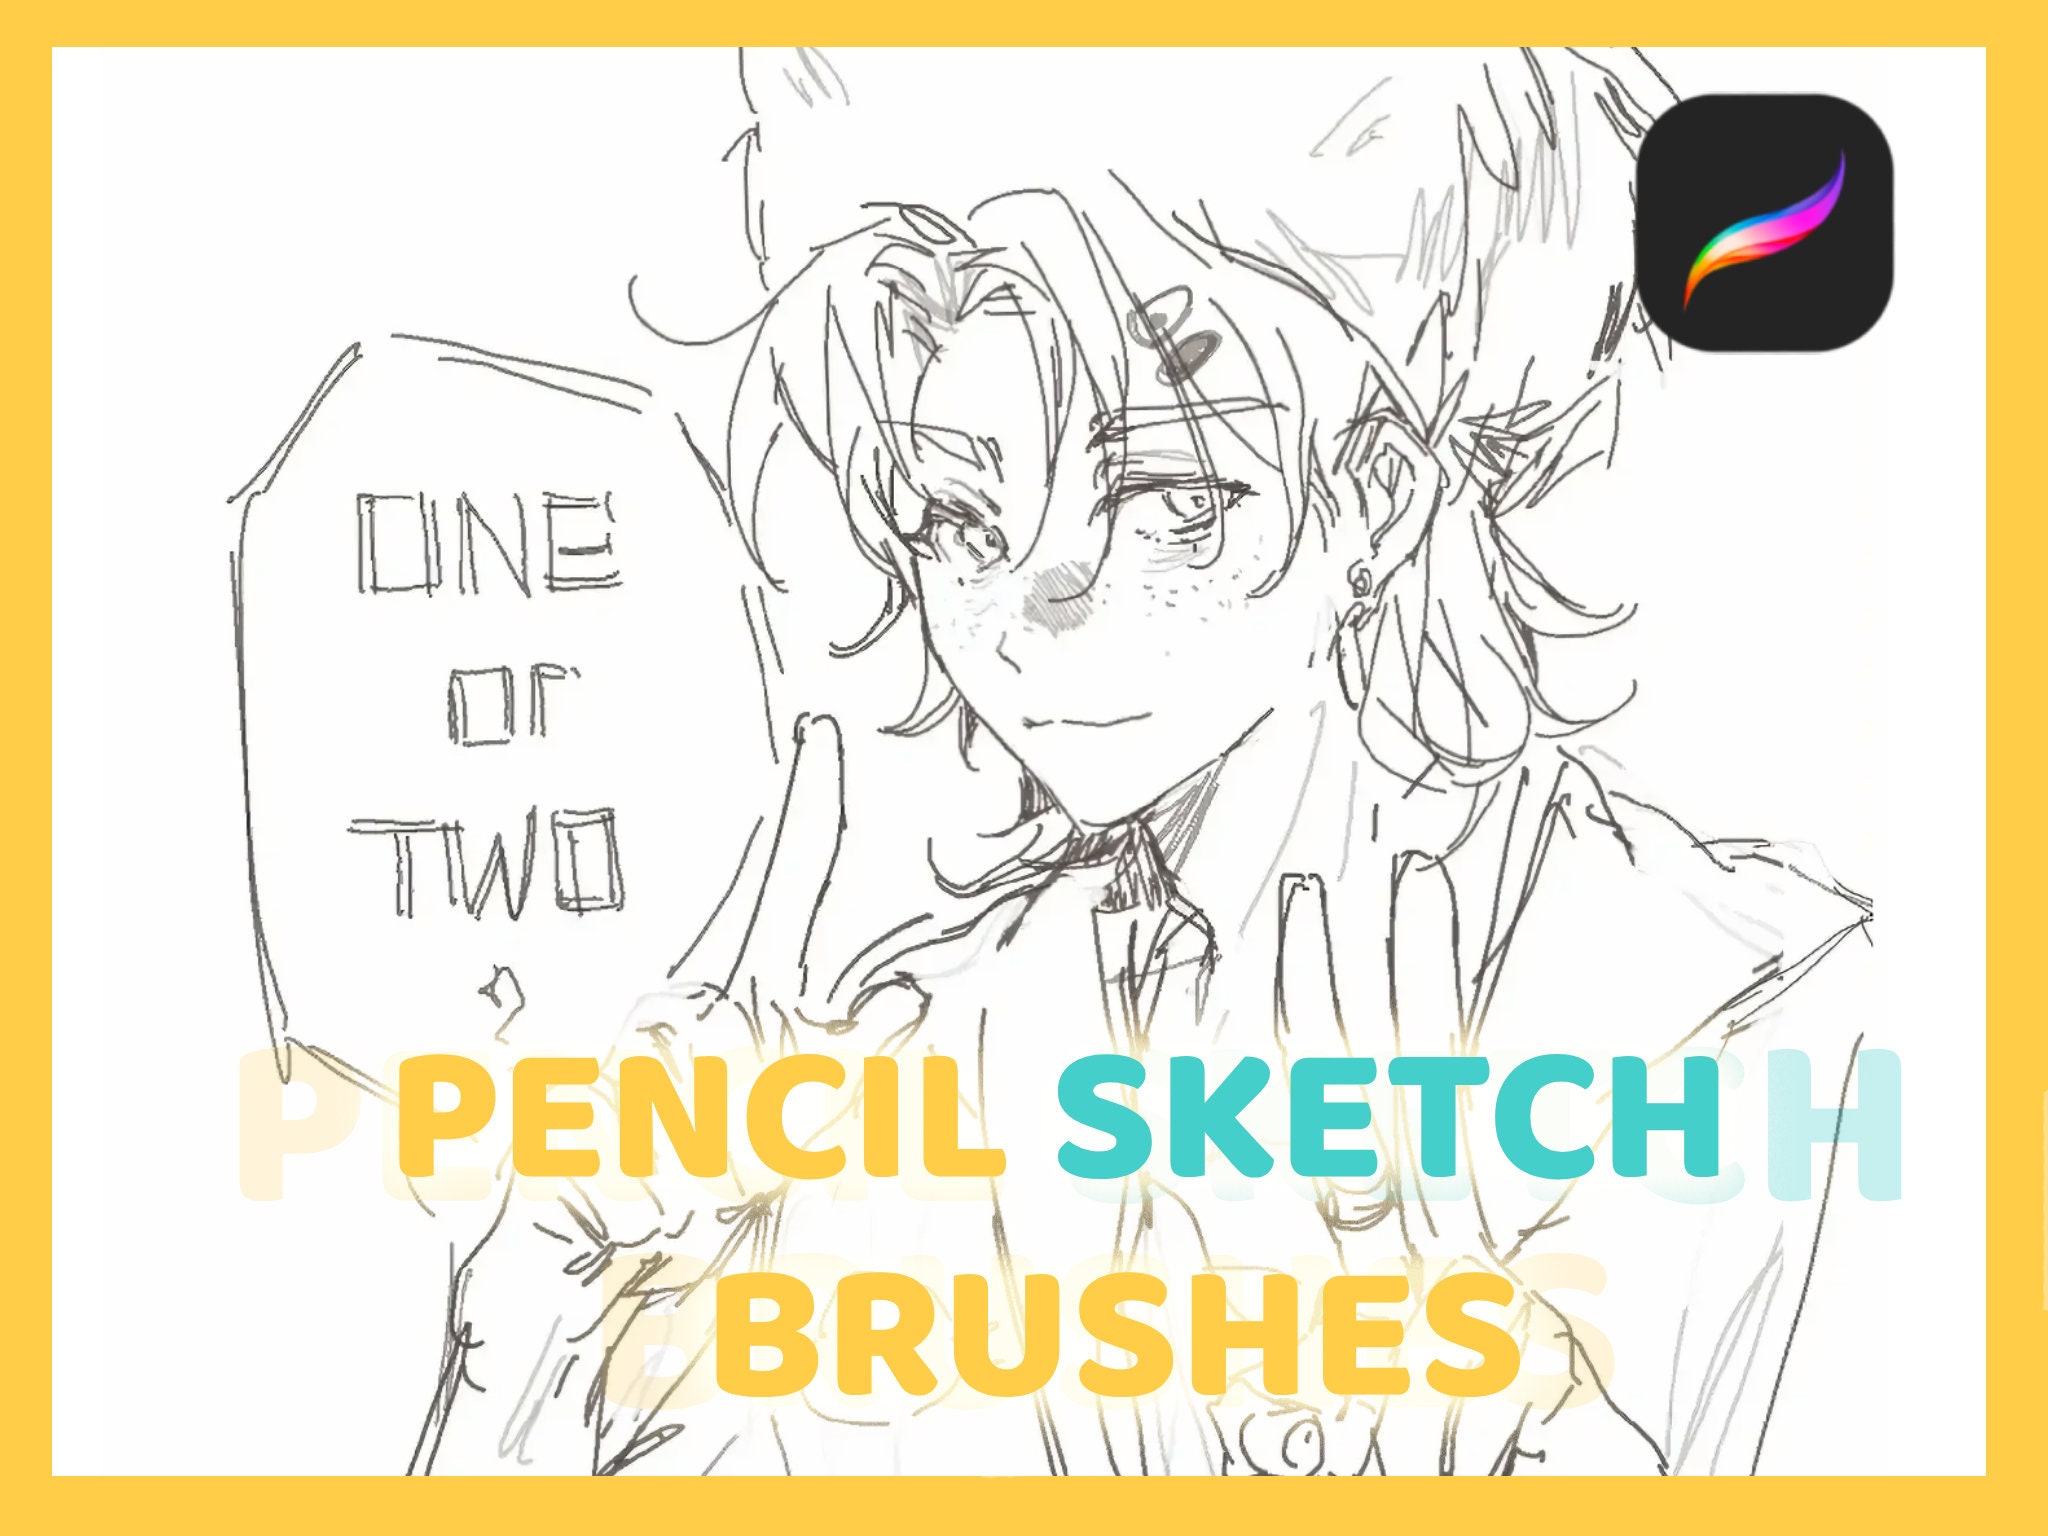 Sculpt Pro Premium Art Drawing Set-24 pc Manga Anime Animation Sketch &  Comic Cartoon Tools Kit w Ink, Watercolors, Knives, Pen, Nibs, Eraser, and